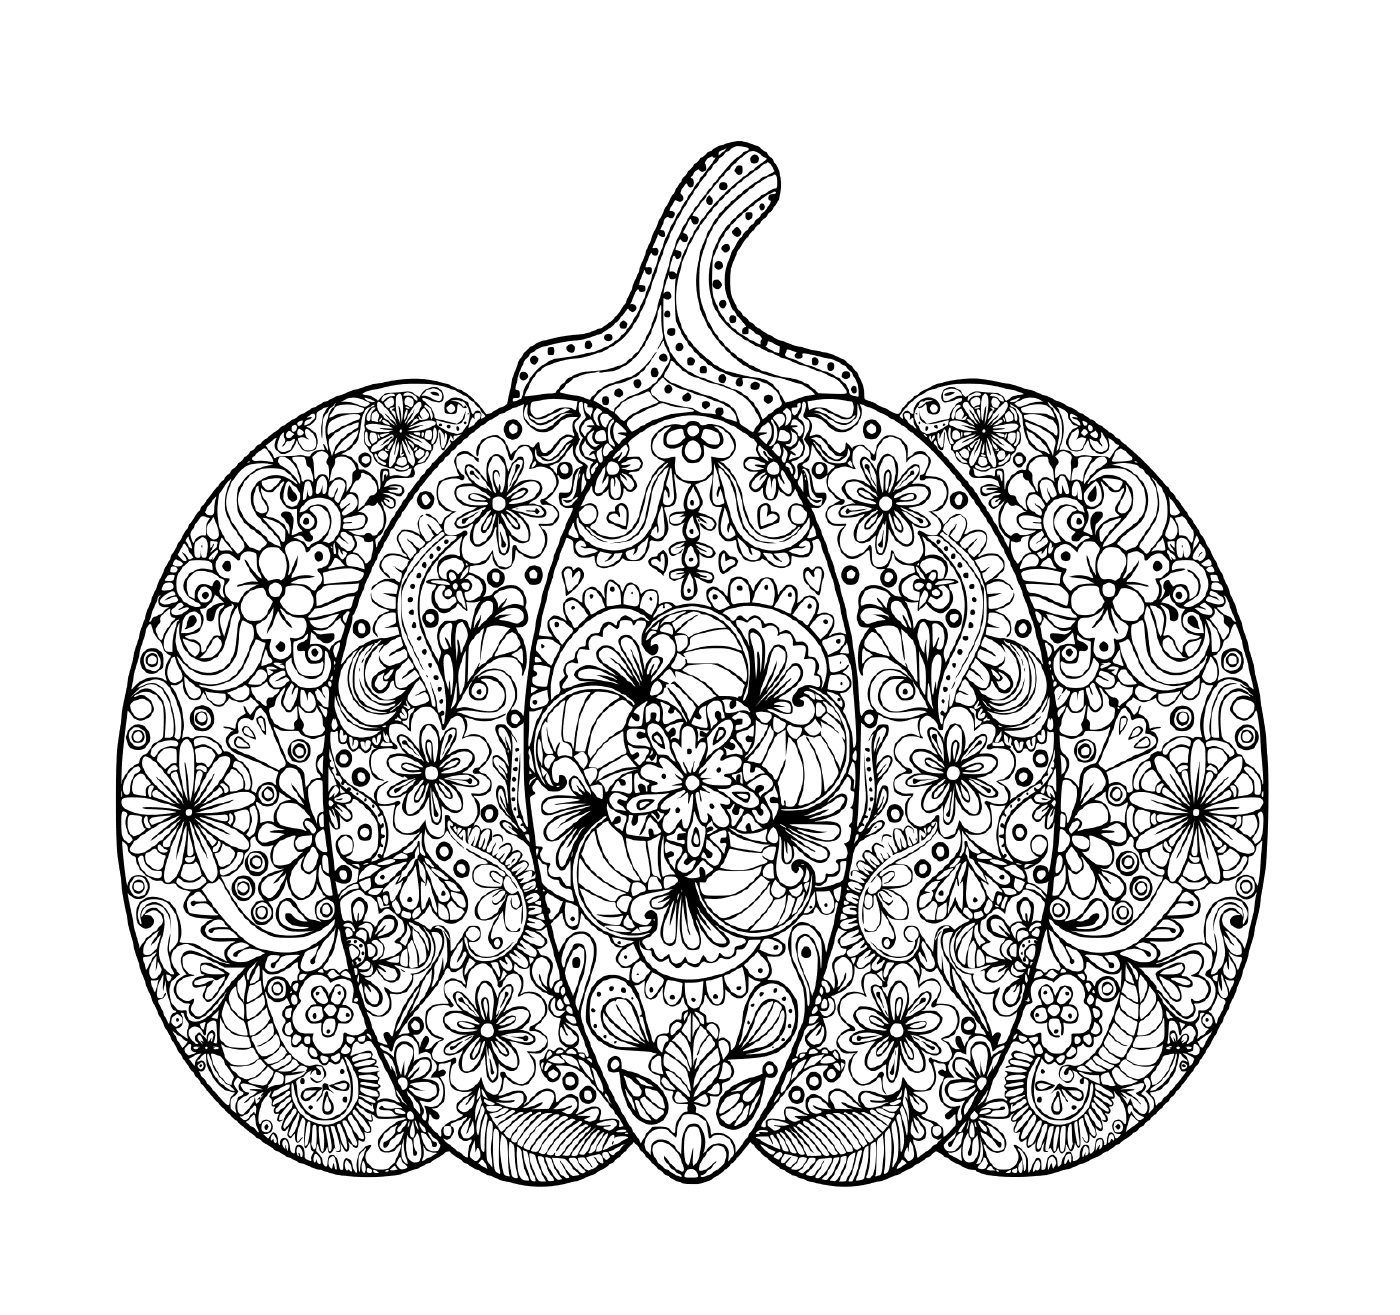  Zentangle Halloween zucca per adulti 